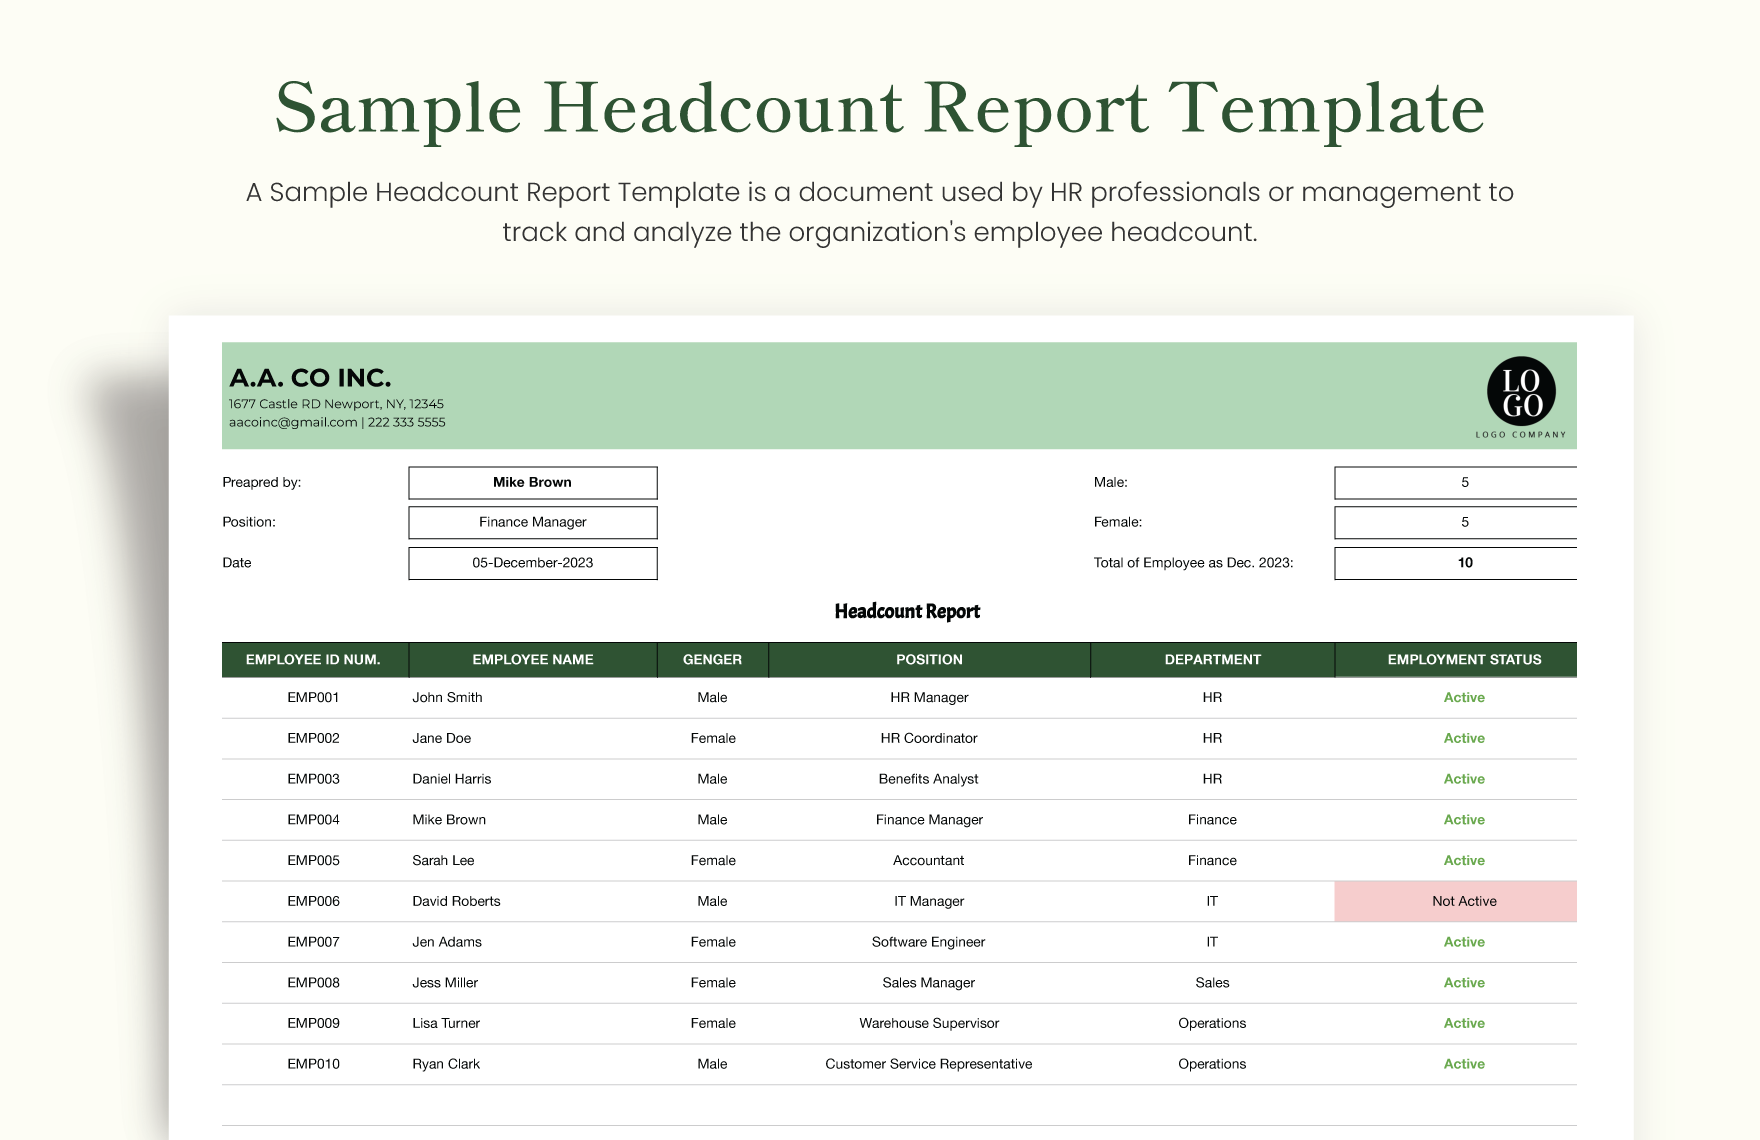 Free Sample Headcount Report Template